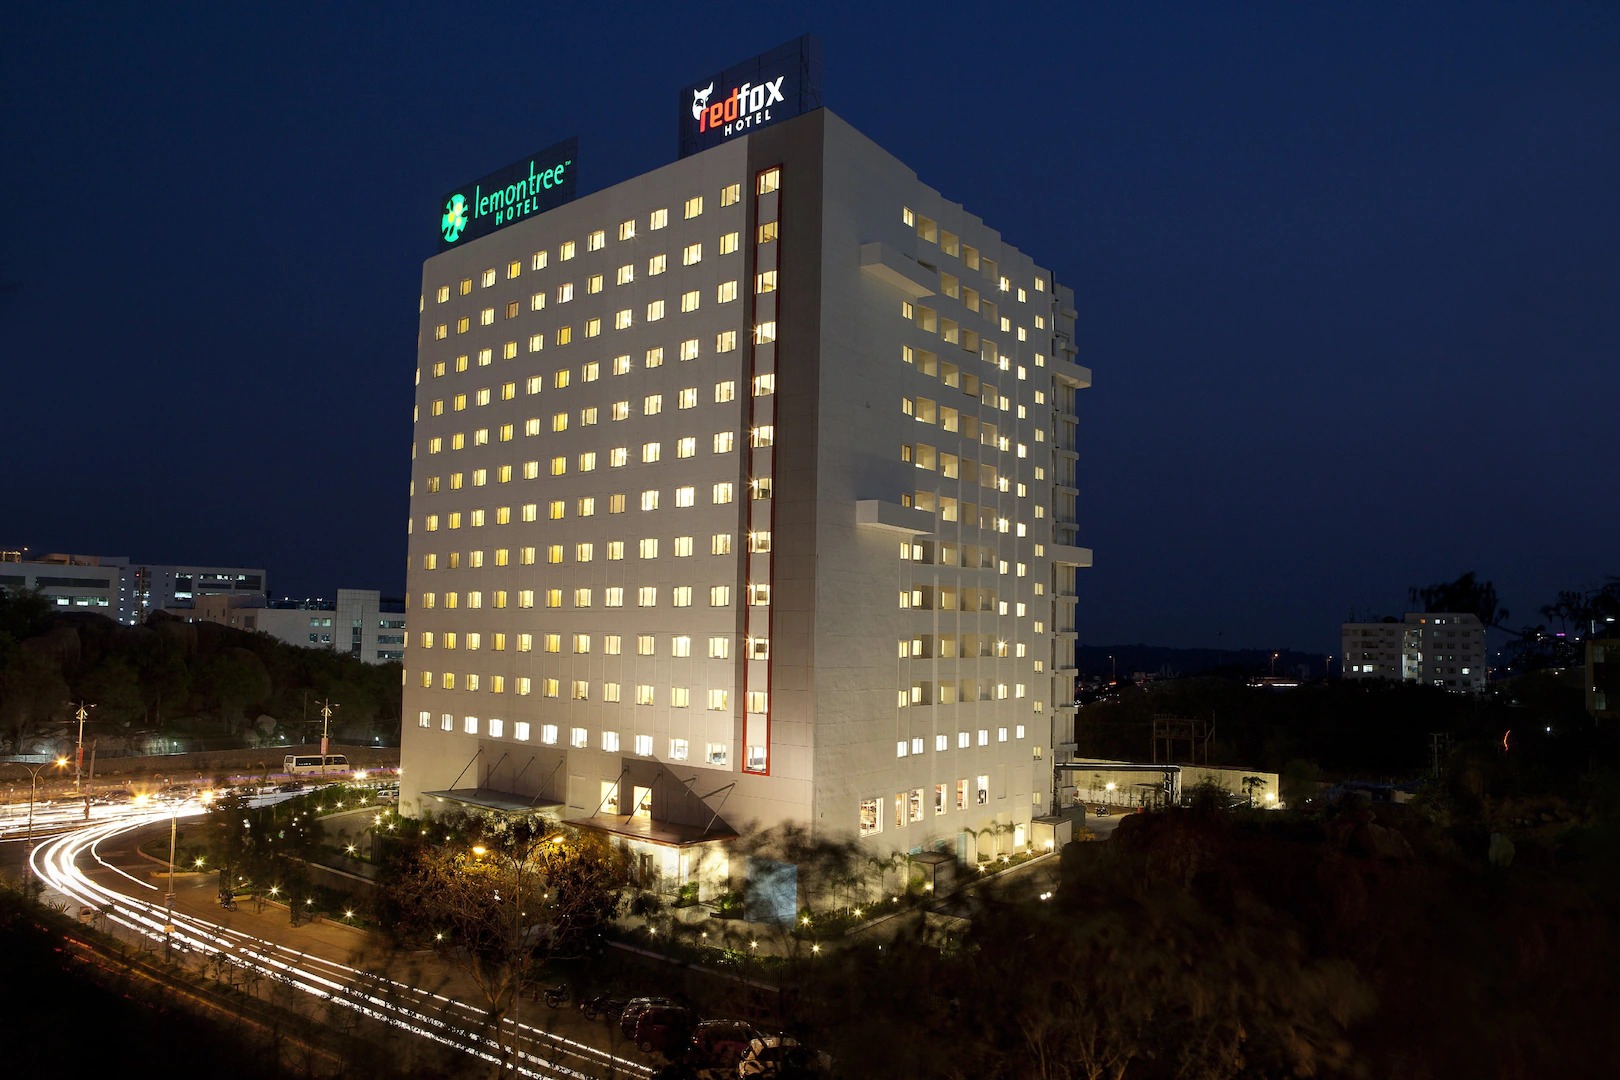 Red Fox Hotel, Hitec City, Hyderabad